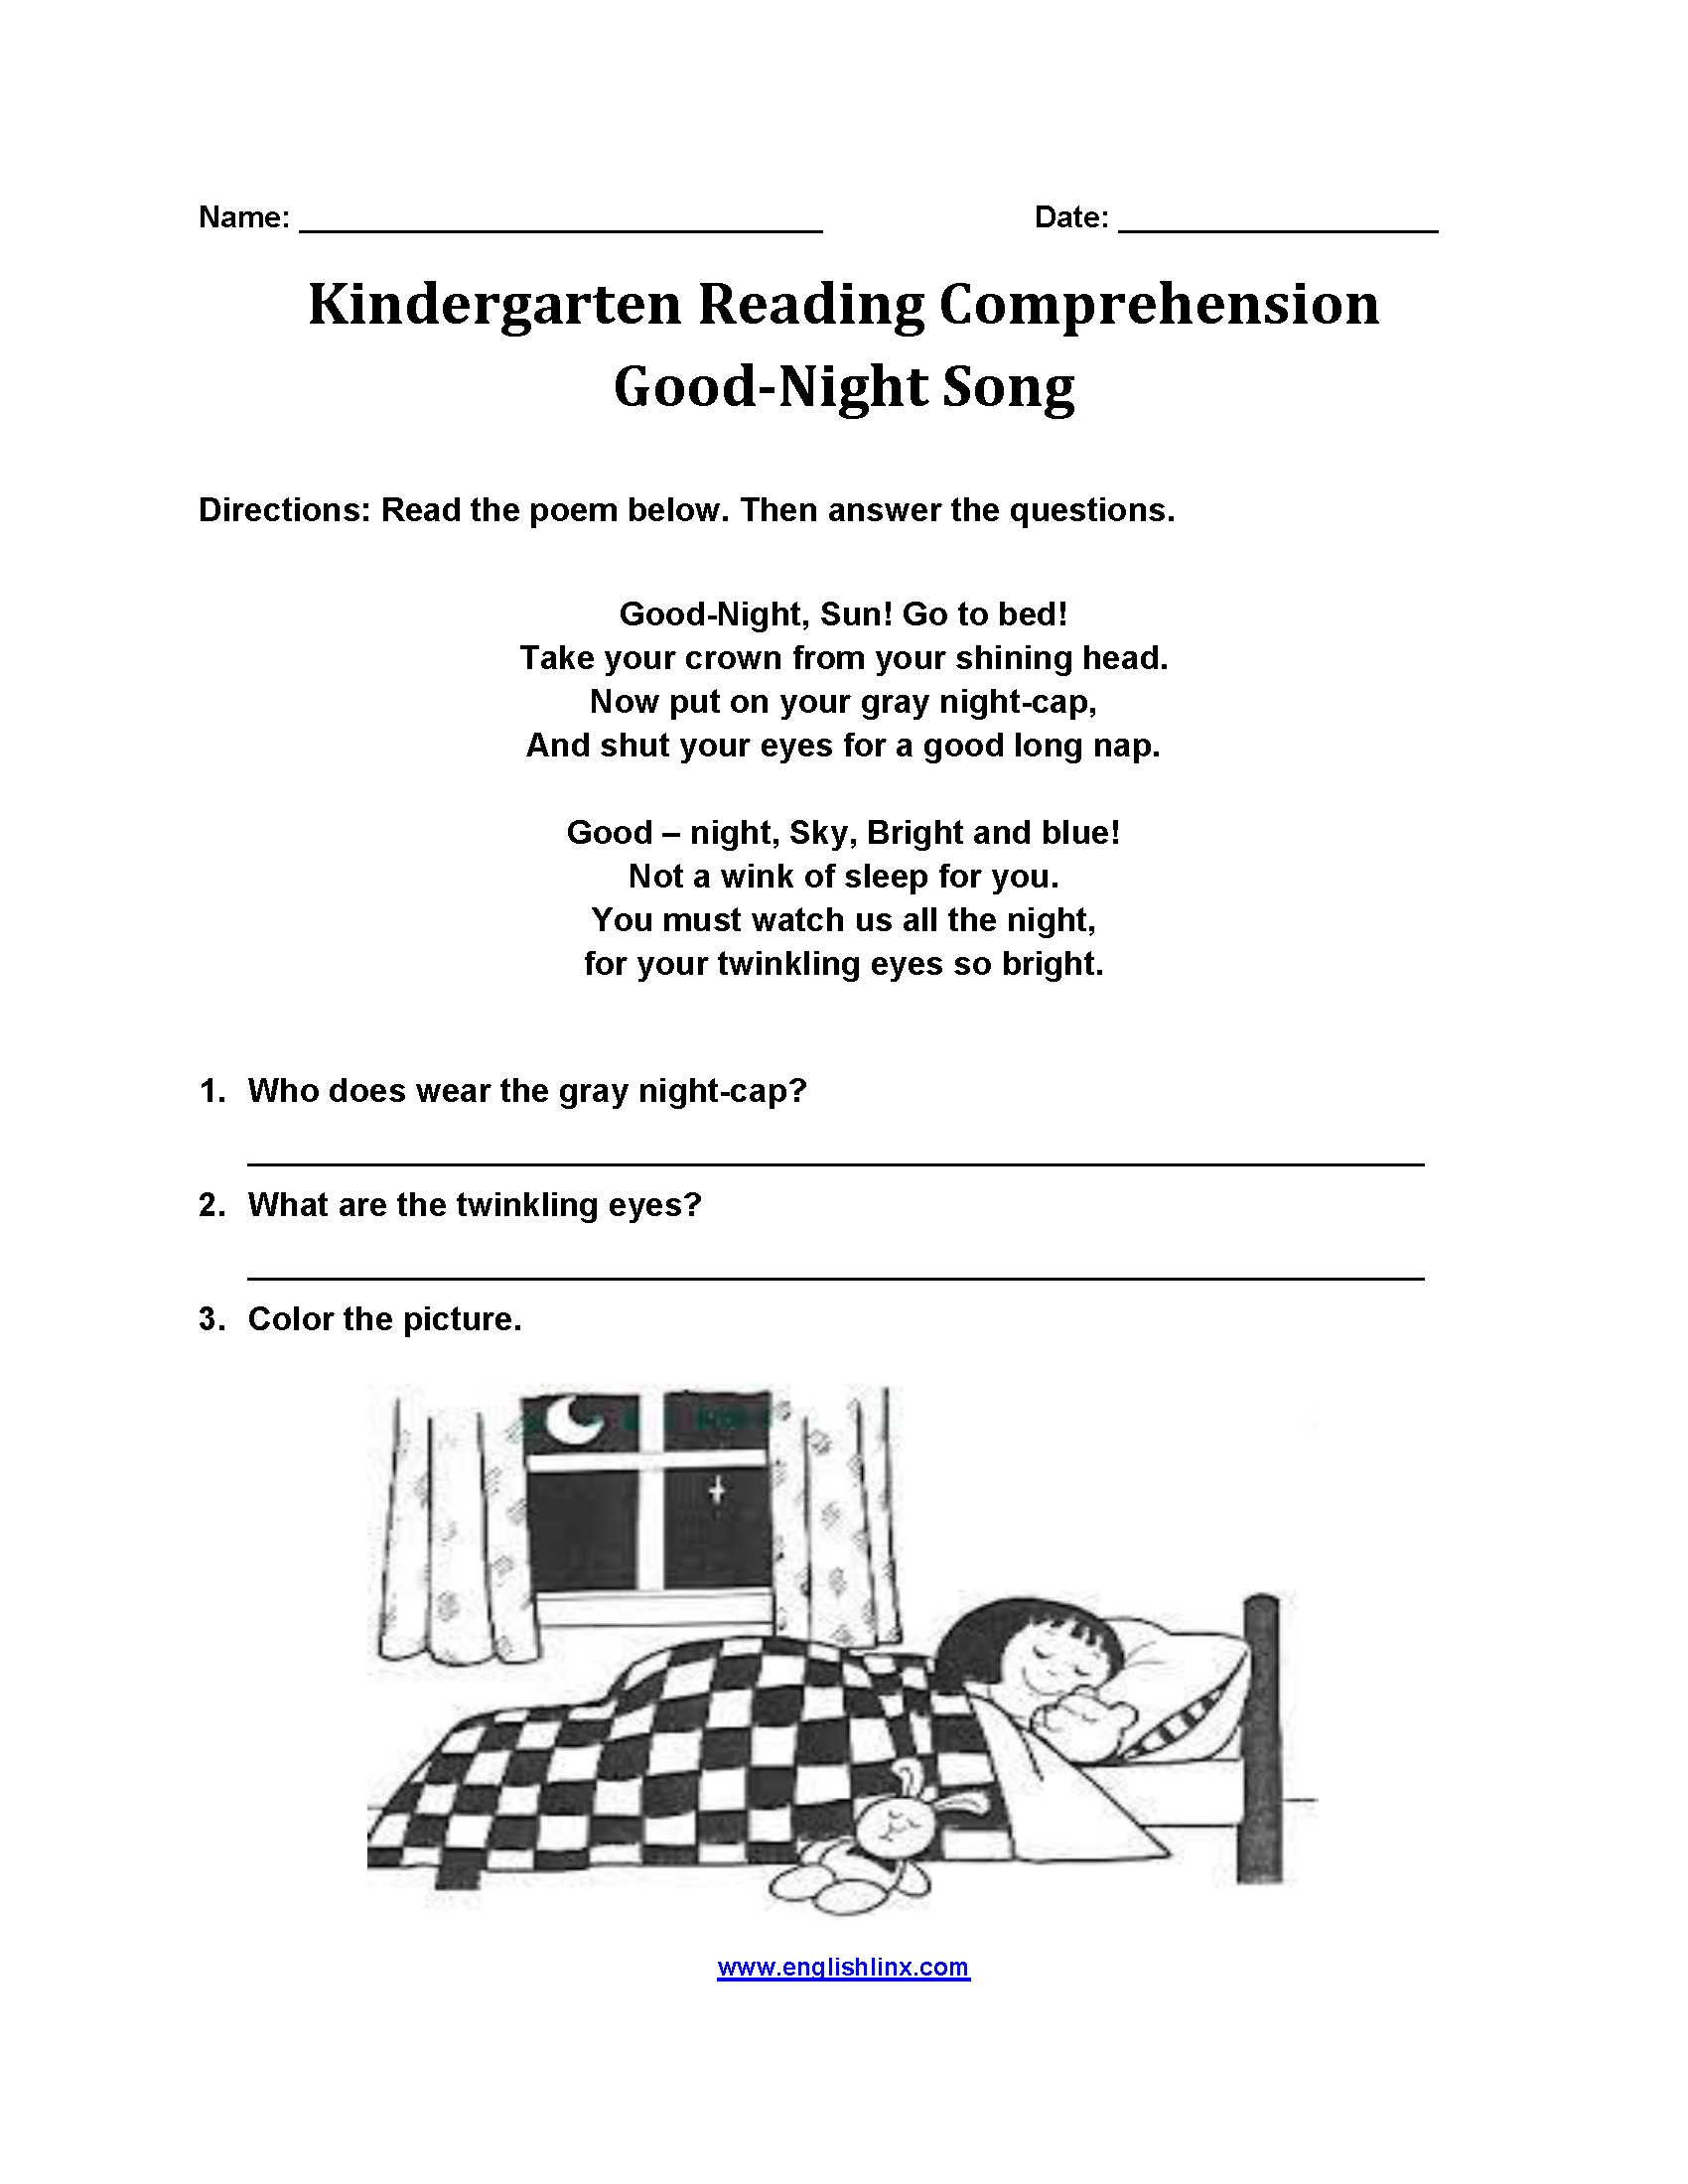 Good Night Song Kindergarten Reading Comprehension Worksheets